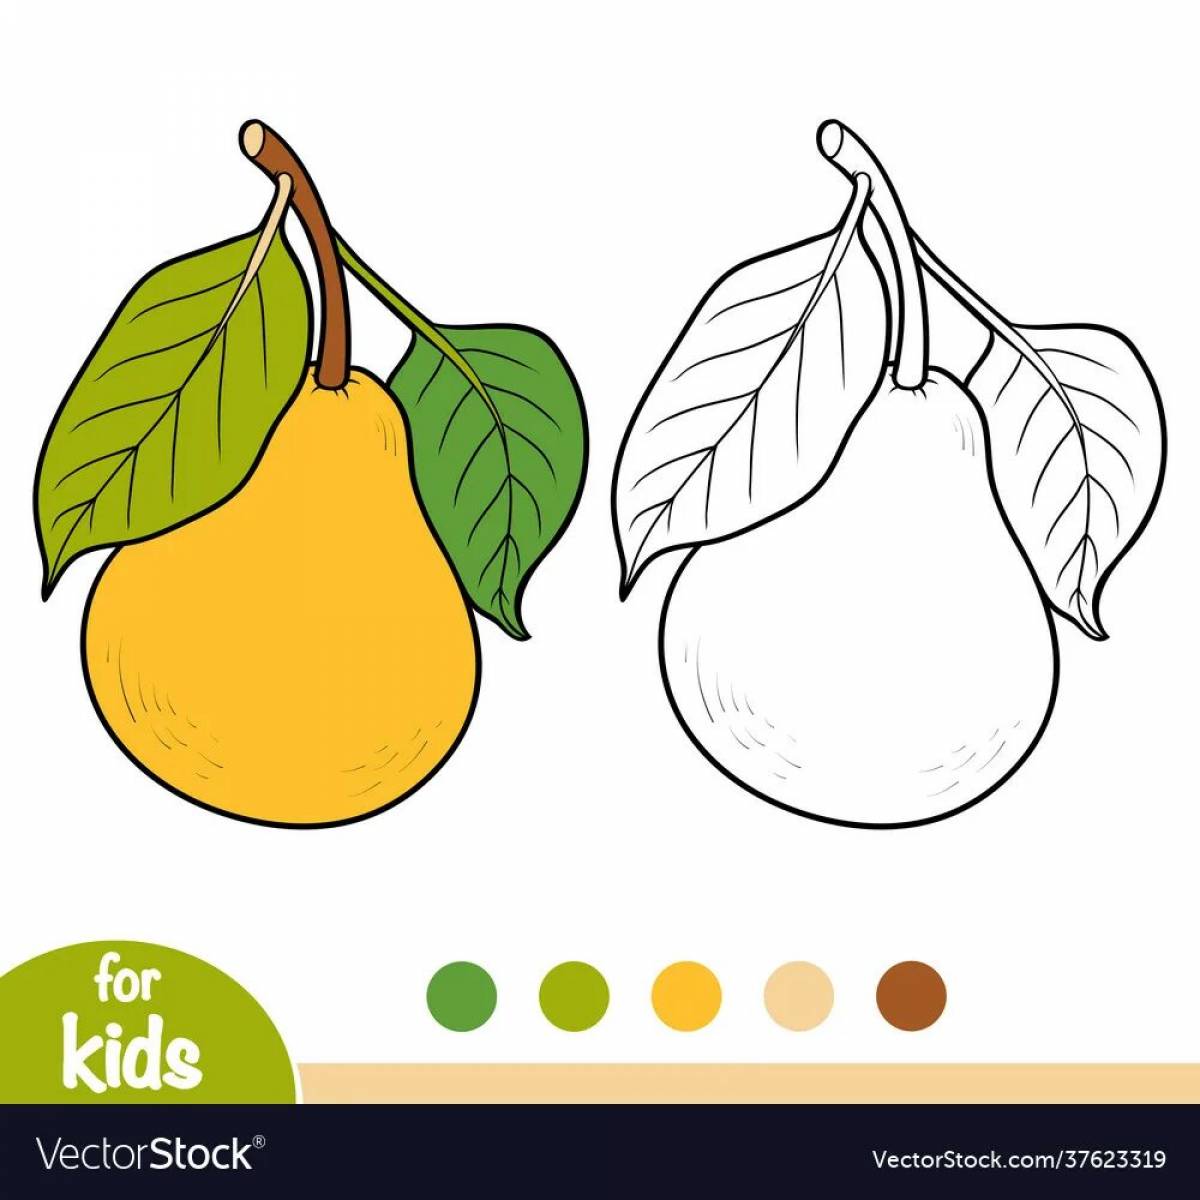 Pear tree #3